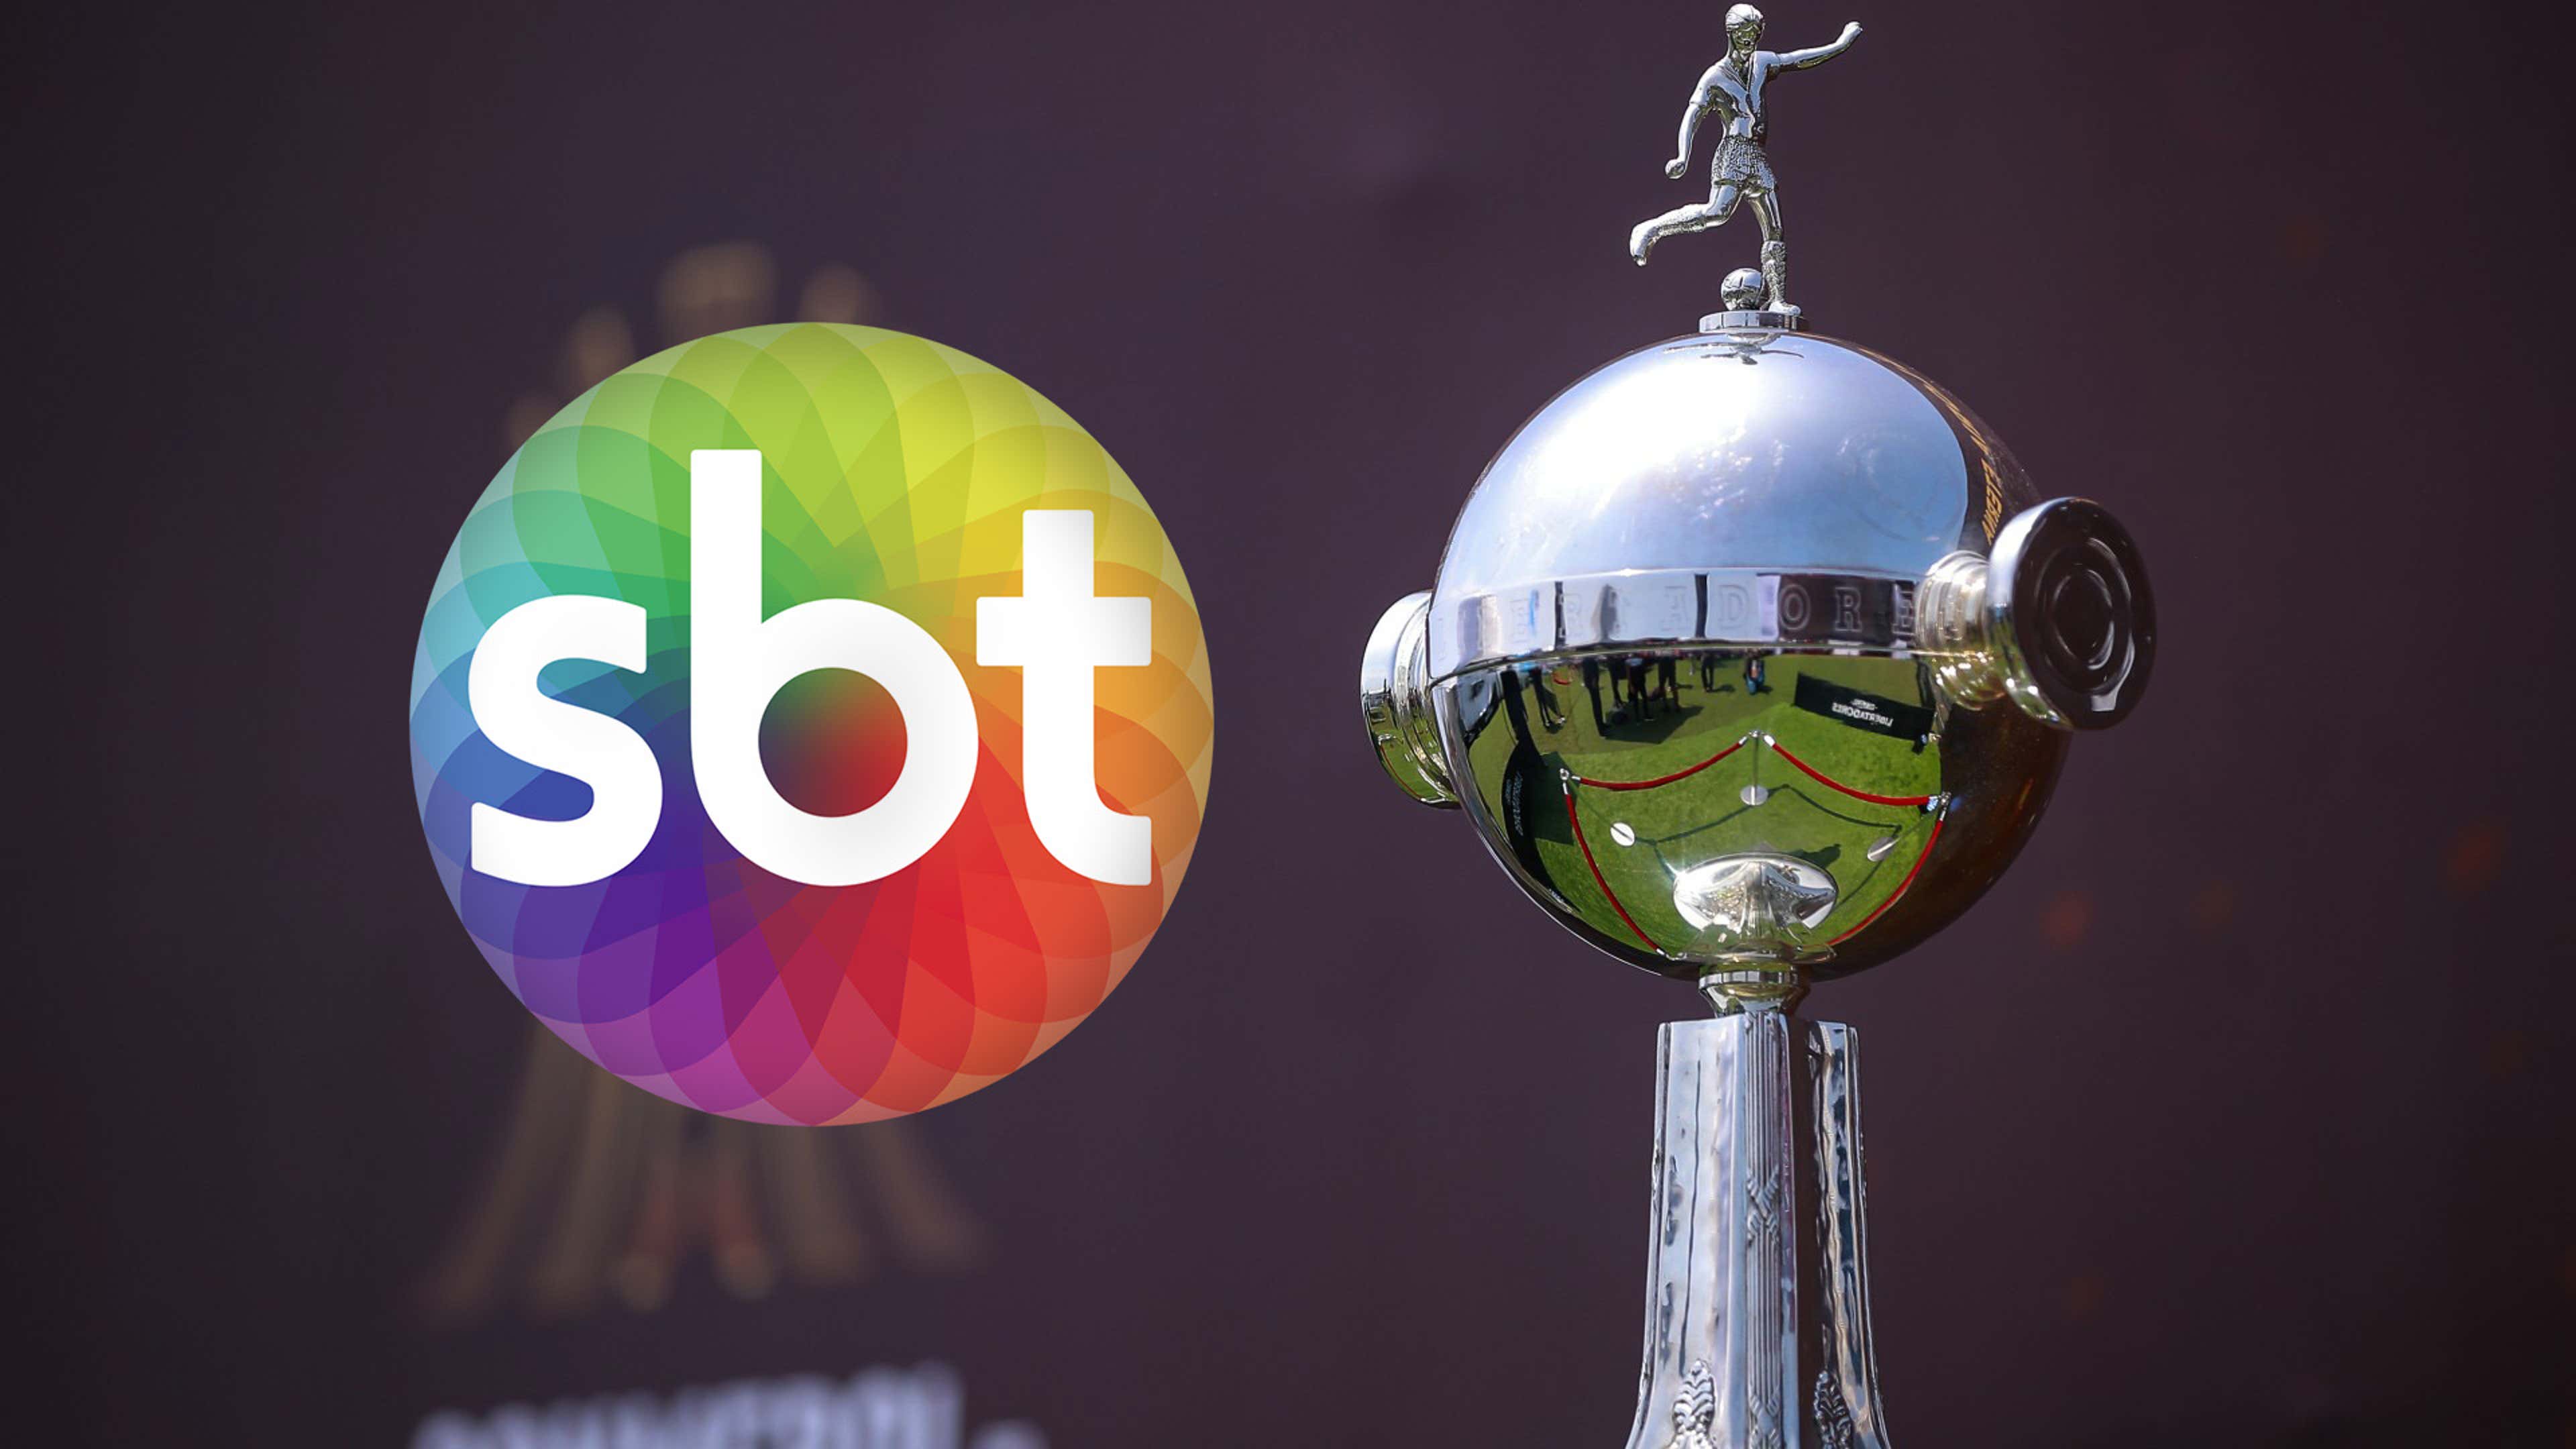 SBT vai transmitir Liga dos campeões na TV aberta; contrato vai